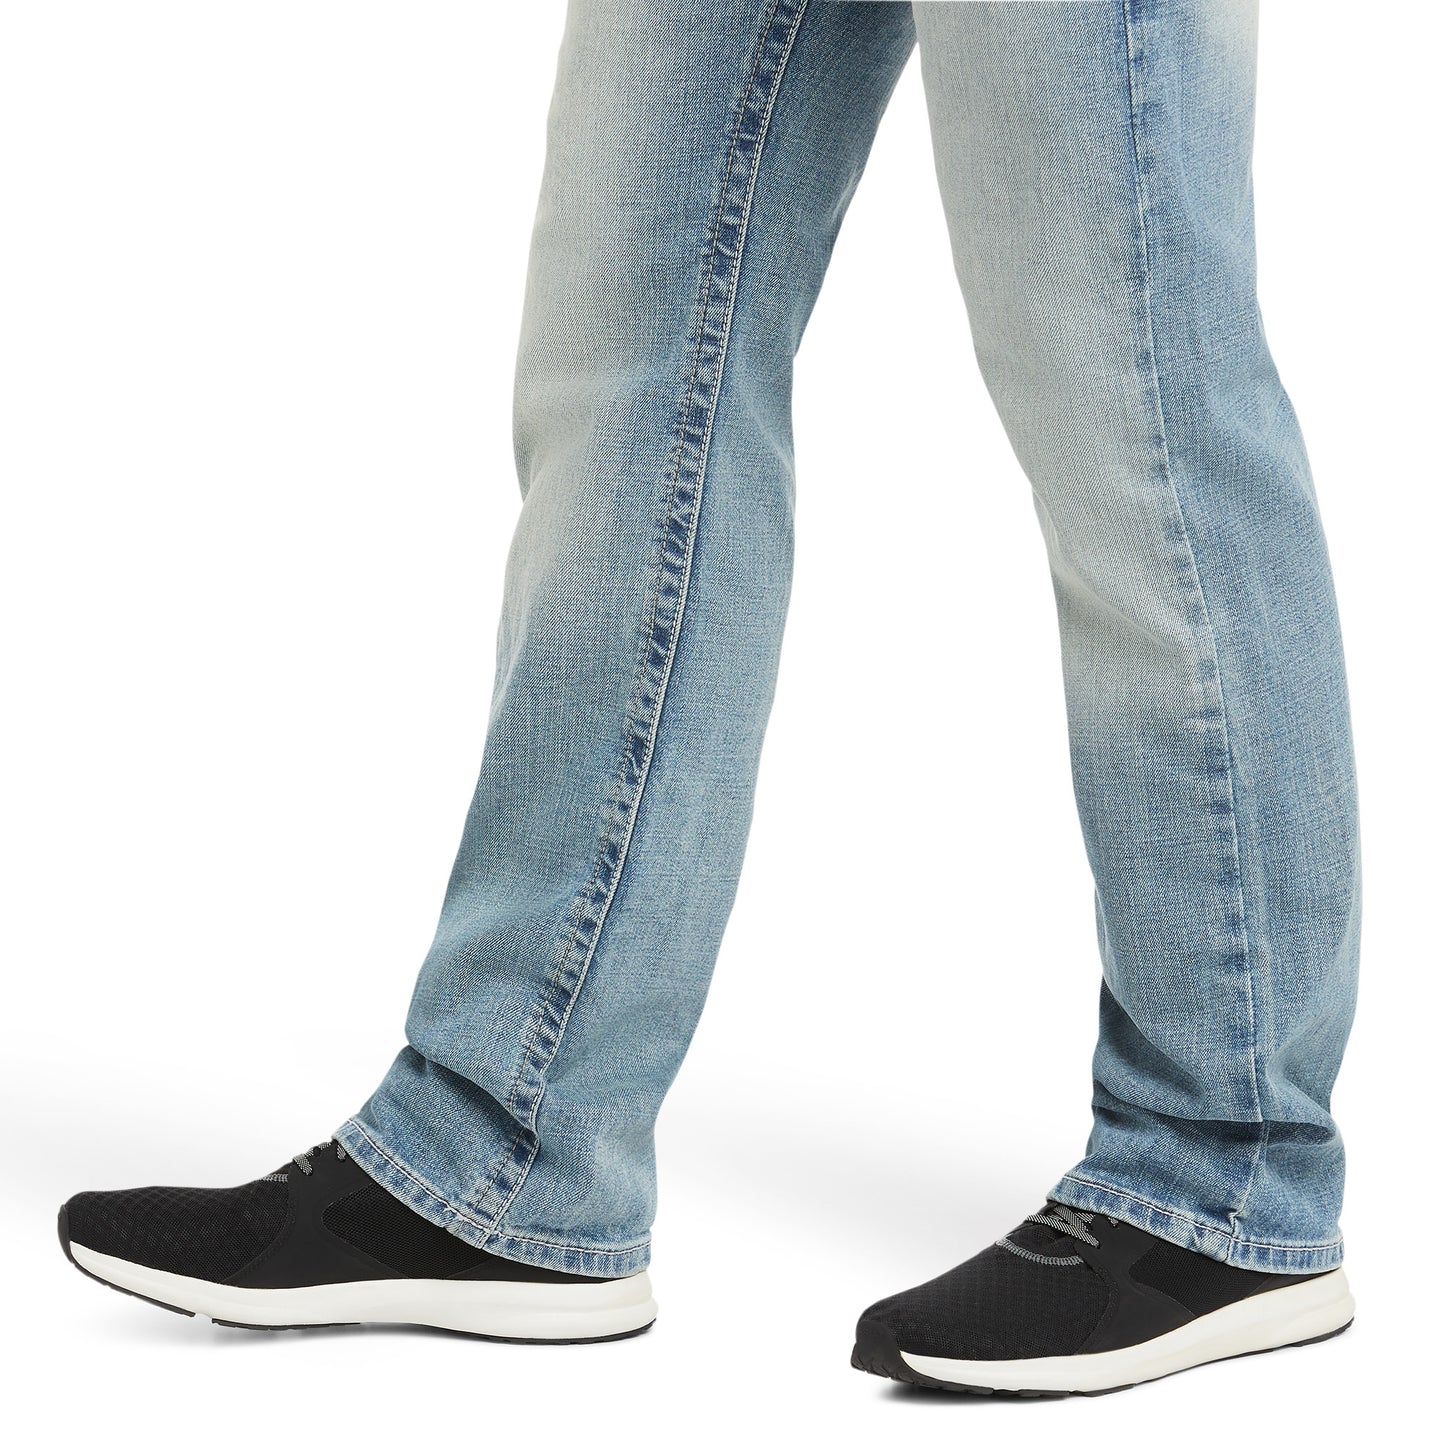 Ariat Men's M7 Rocker Stirling Stackable Straight Leg Shasta Jeans 10031997